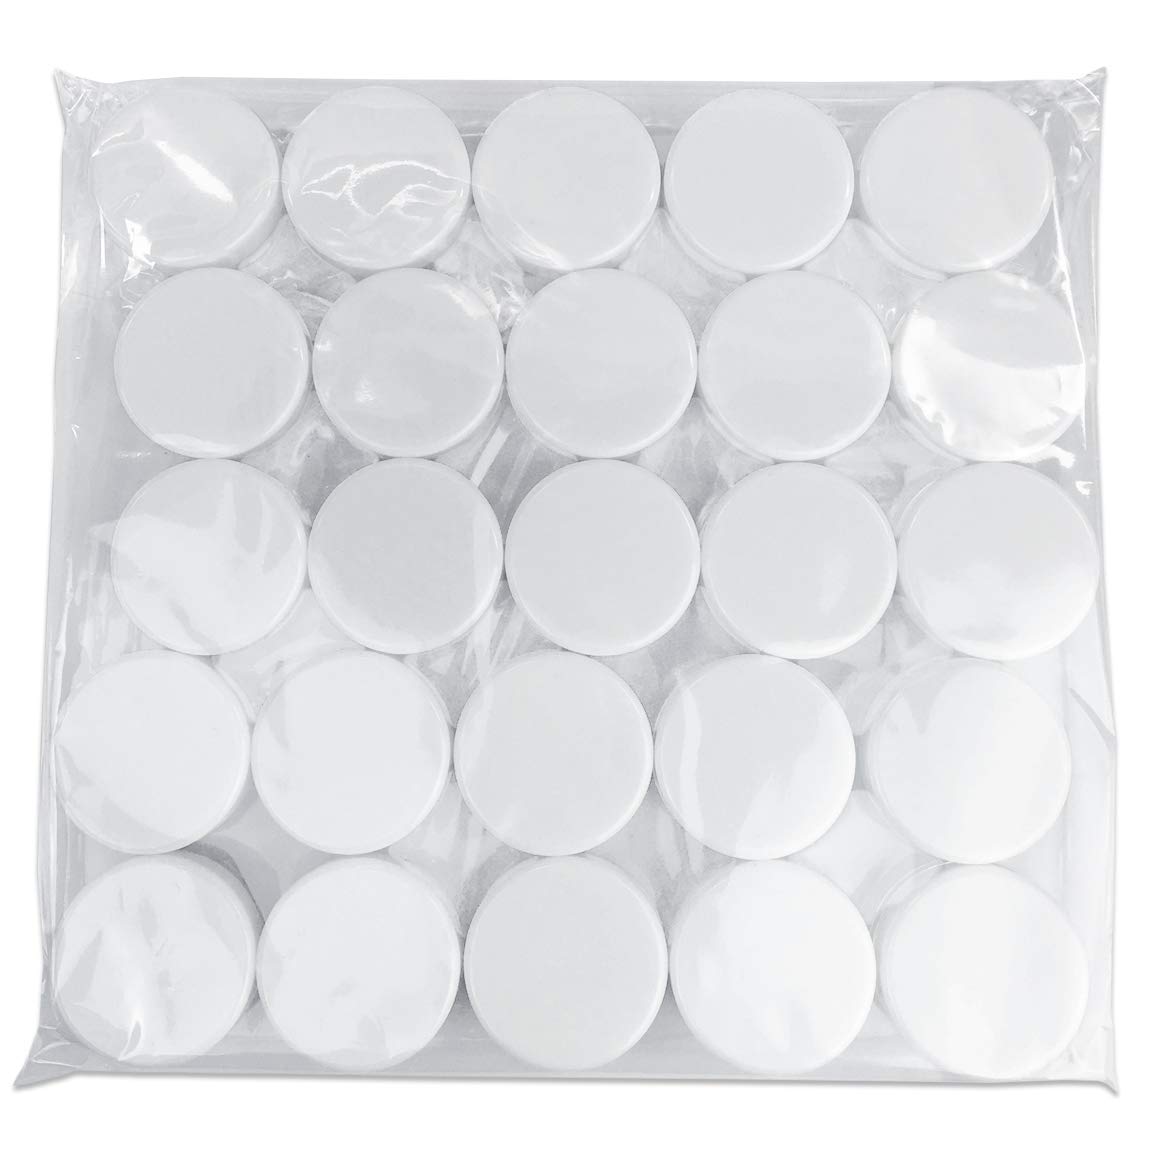 Beauticom (100 Pieces Jars + Lid) 3G/3ML Round Clear Jars with White Screw Cap Lids for Scrubs, Oils, Toner, Salves, Creams, Lotions, Makeup Samples, Lip Balms - BPA Free